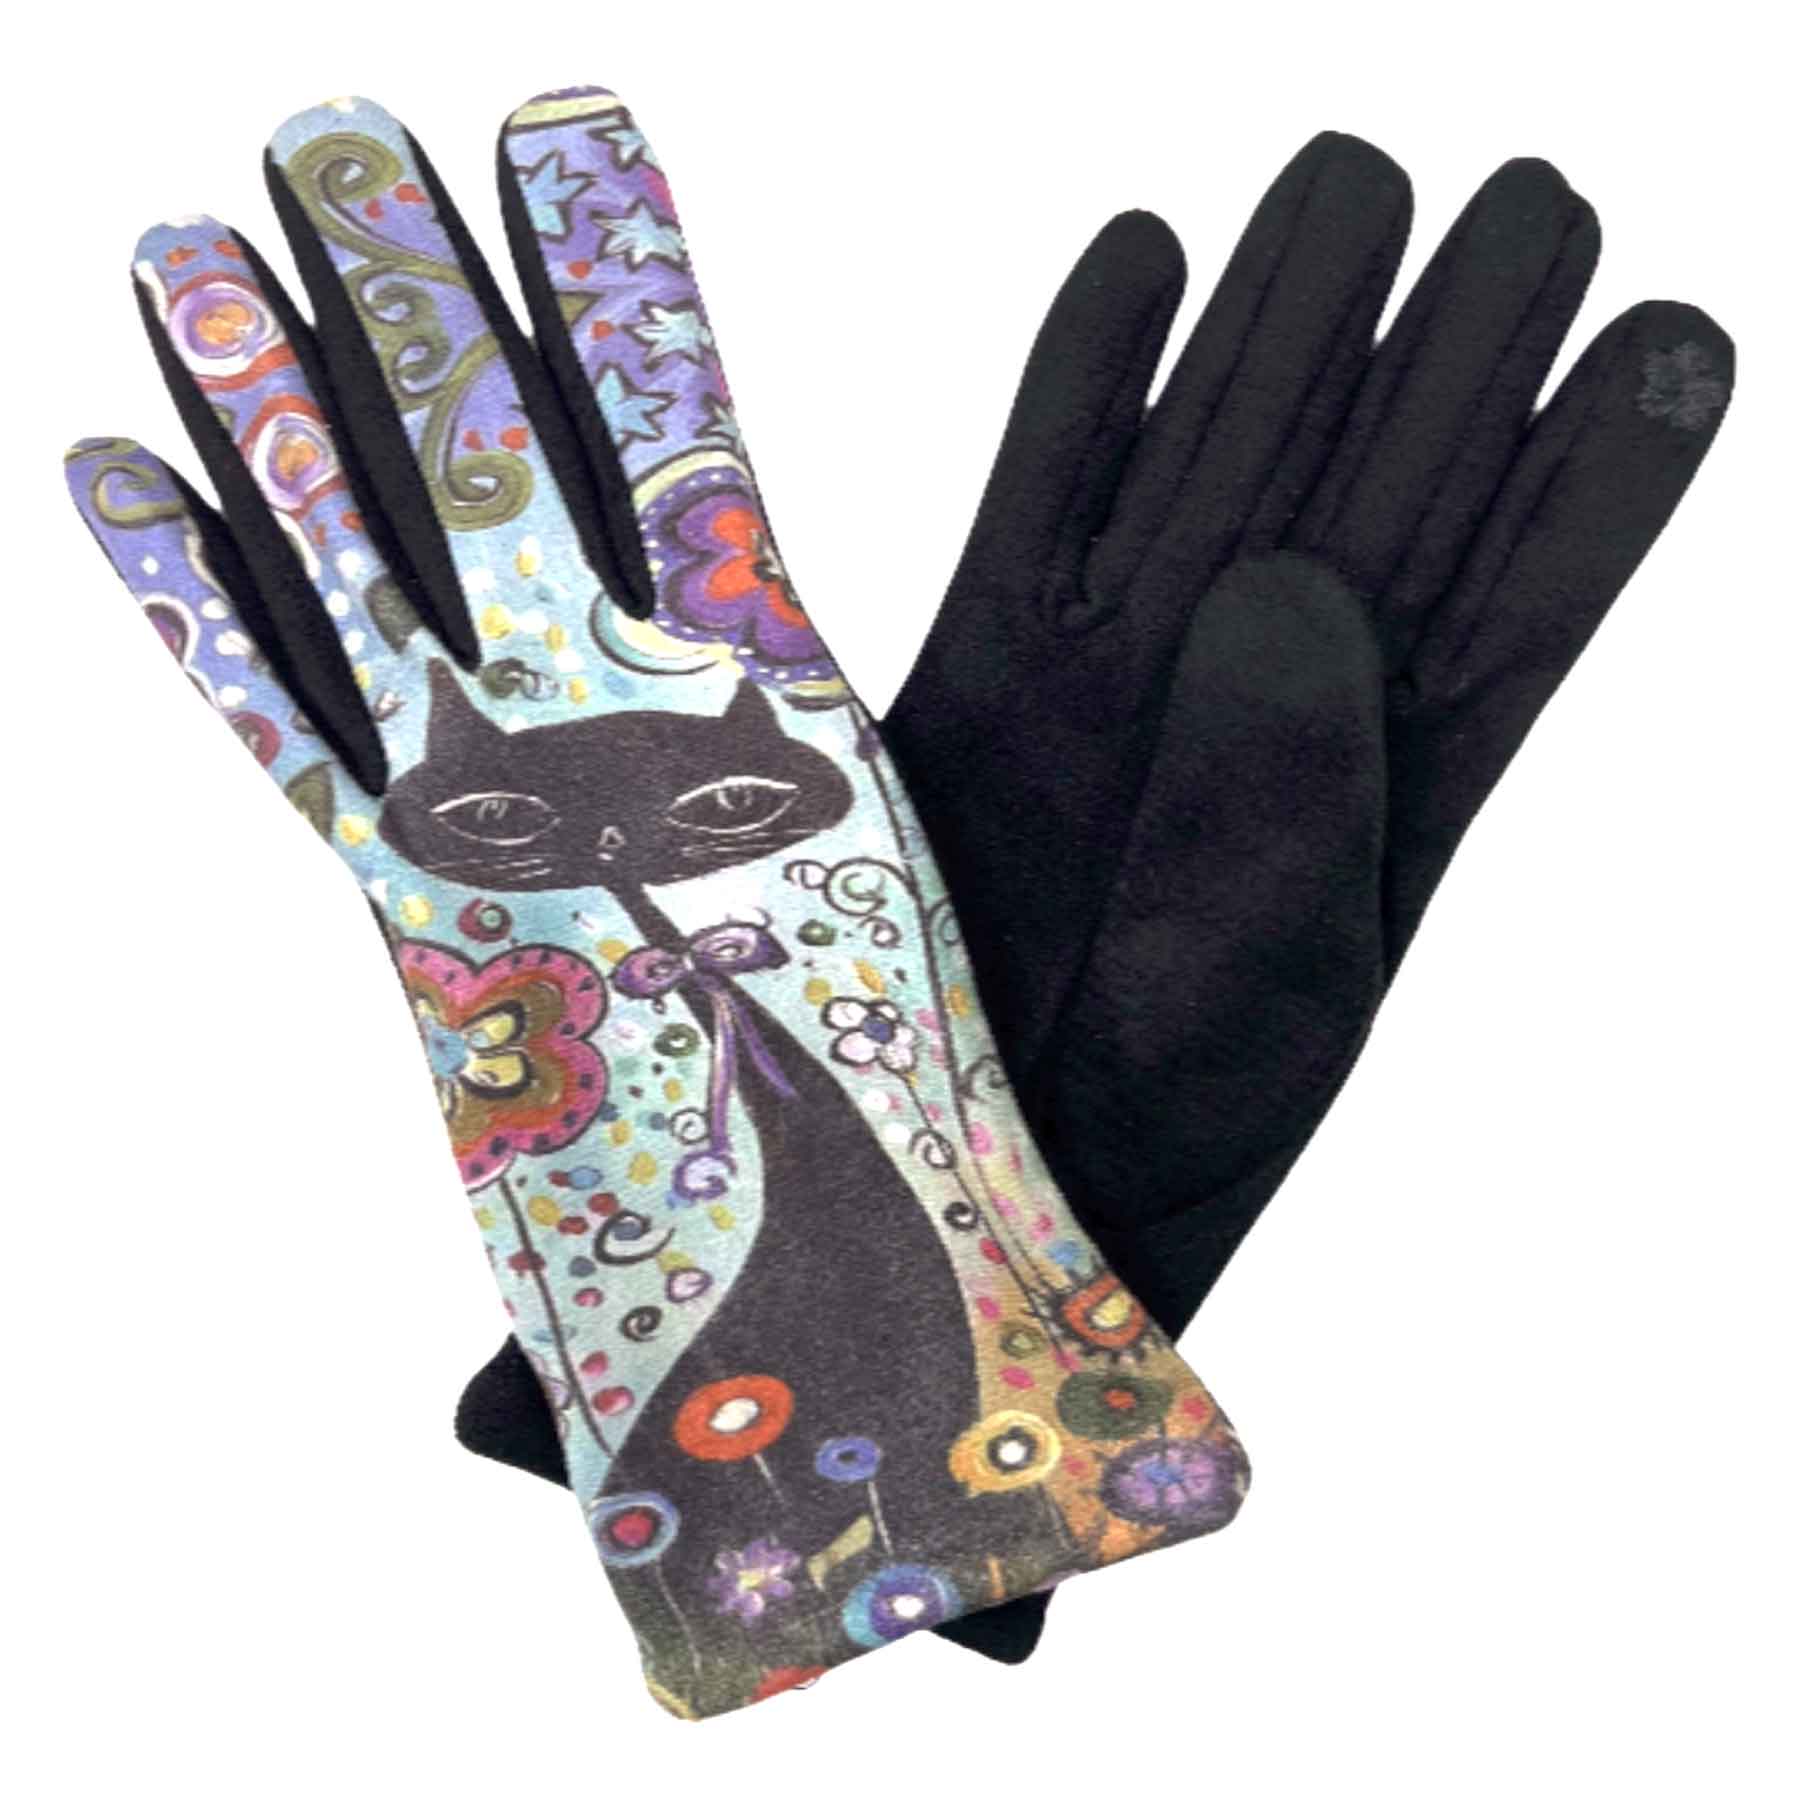 ART - 34<br>
Touch Screen Gloves 